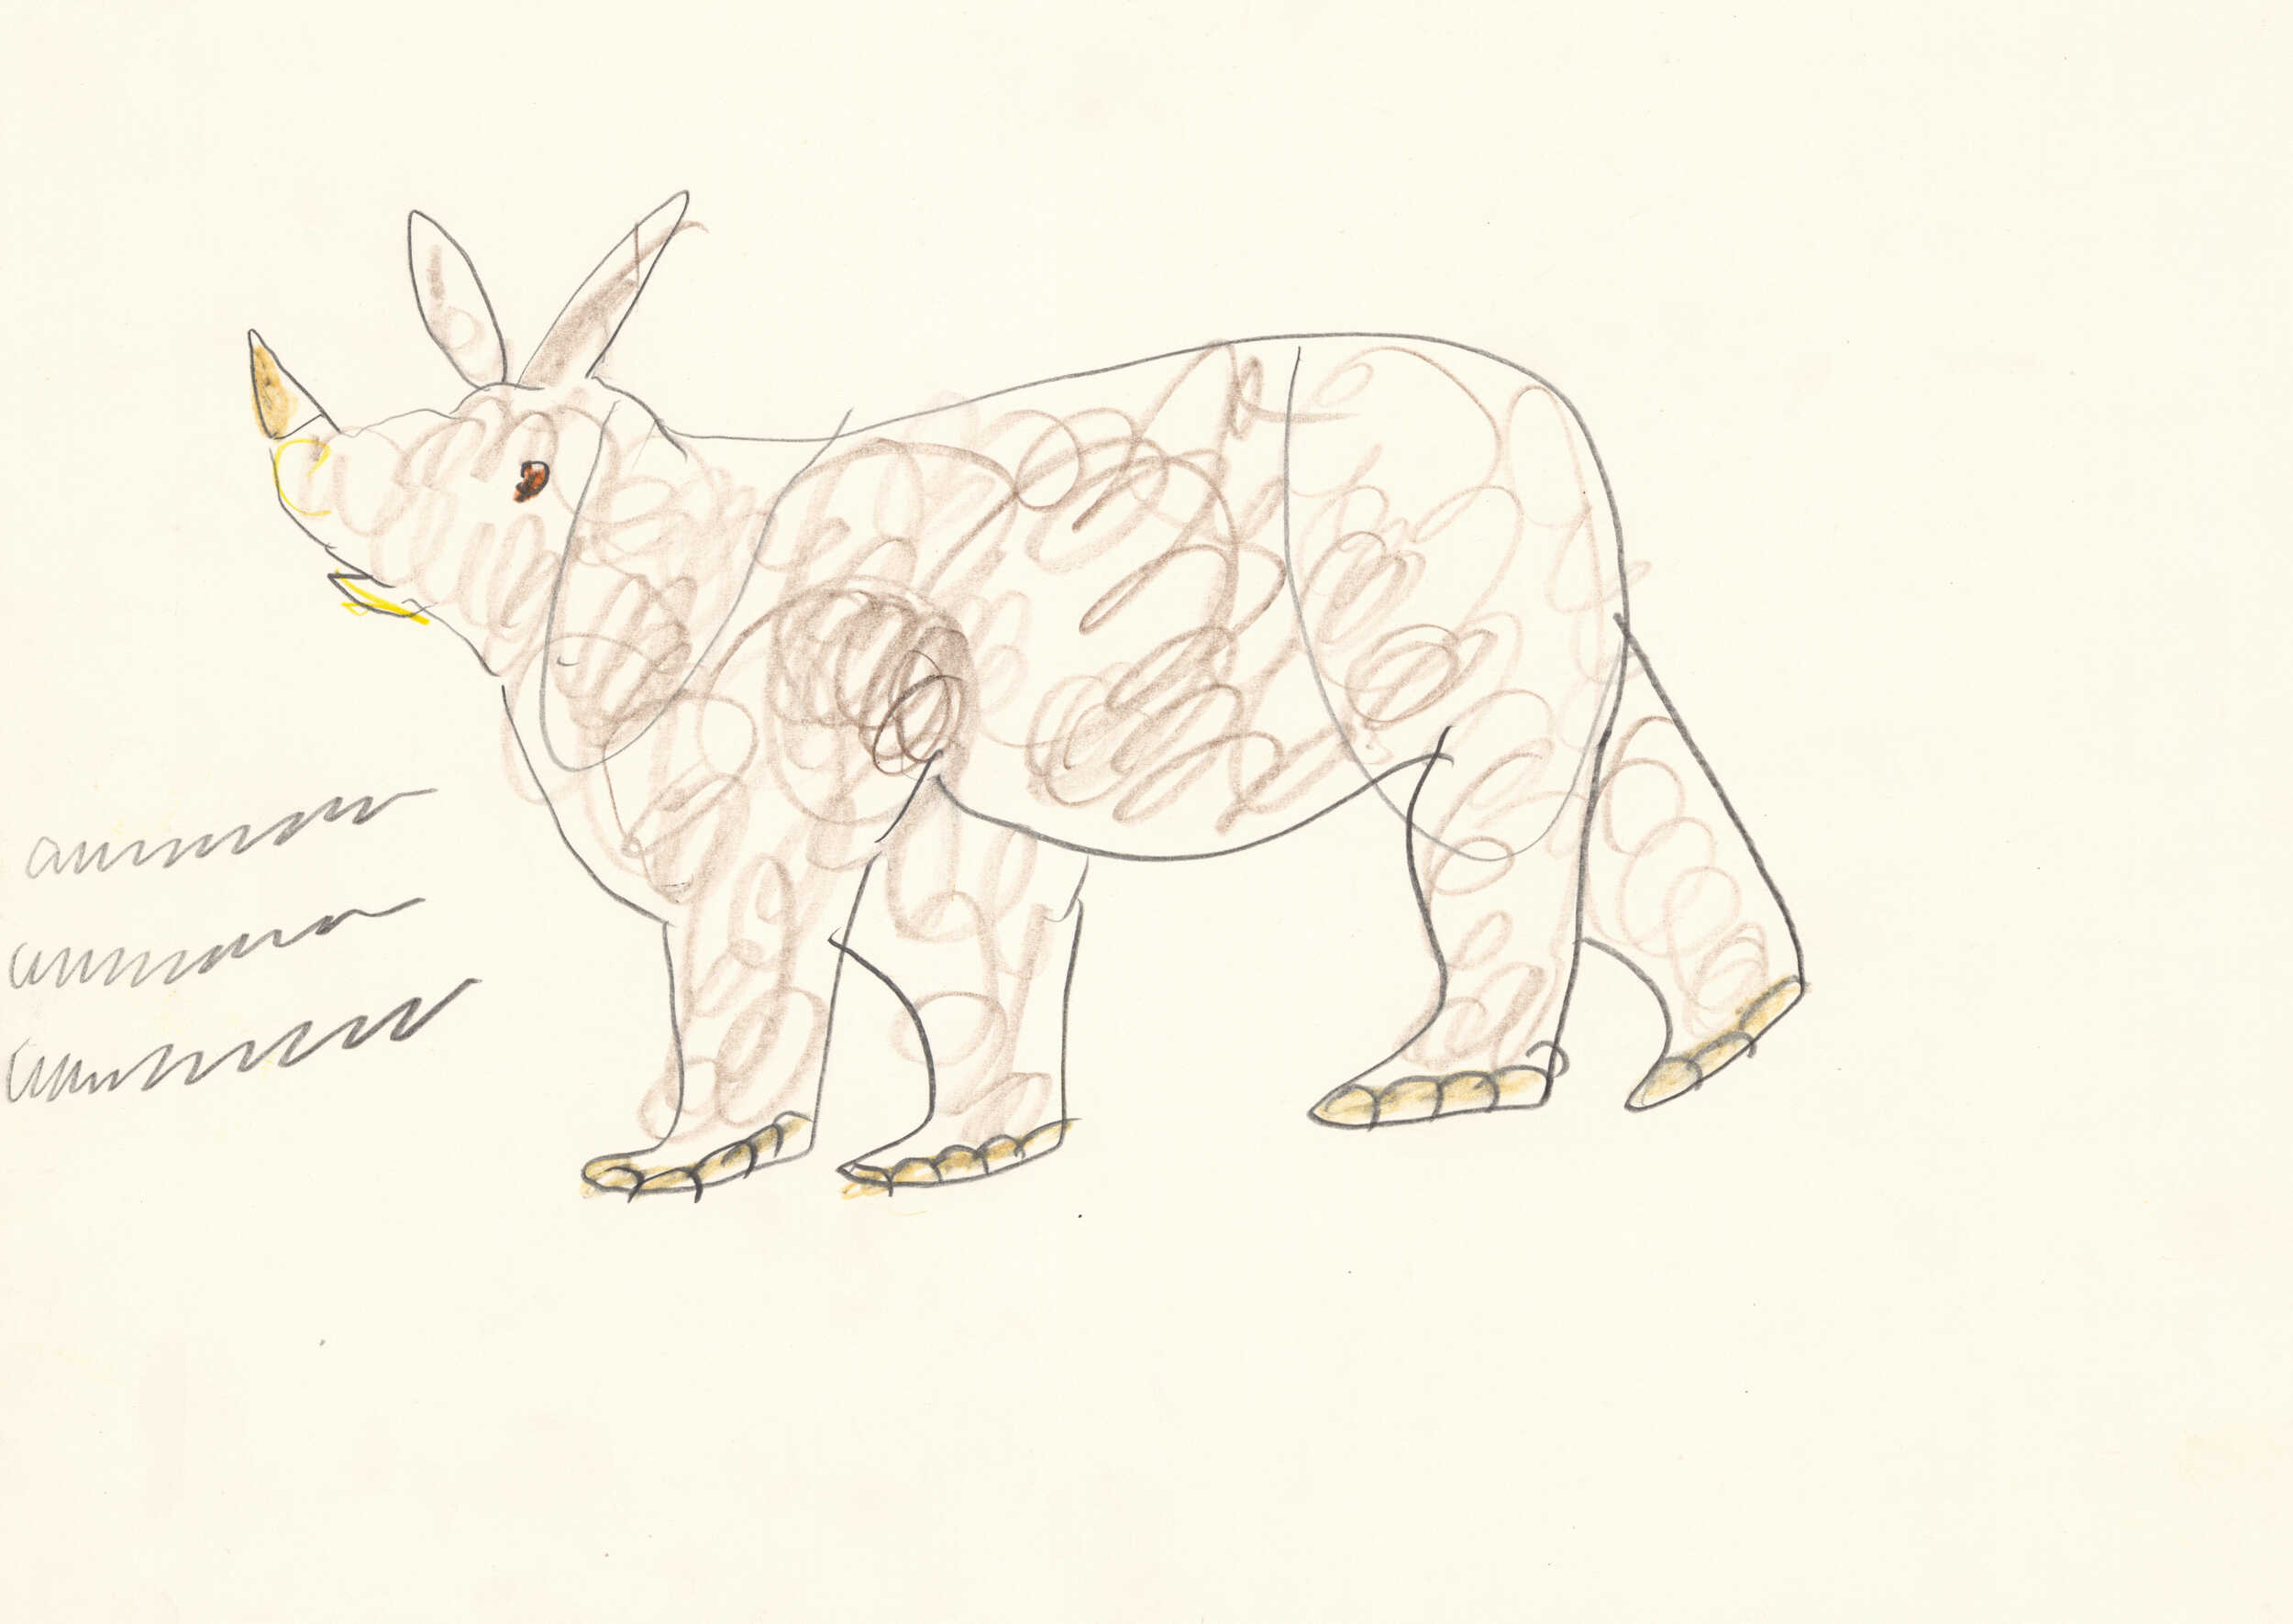 kamlander franz - Nashorn / Rhinoceros